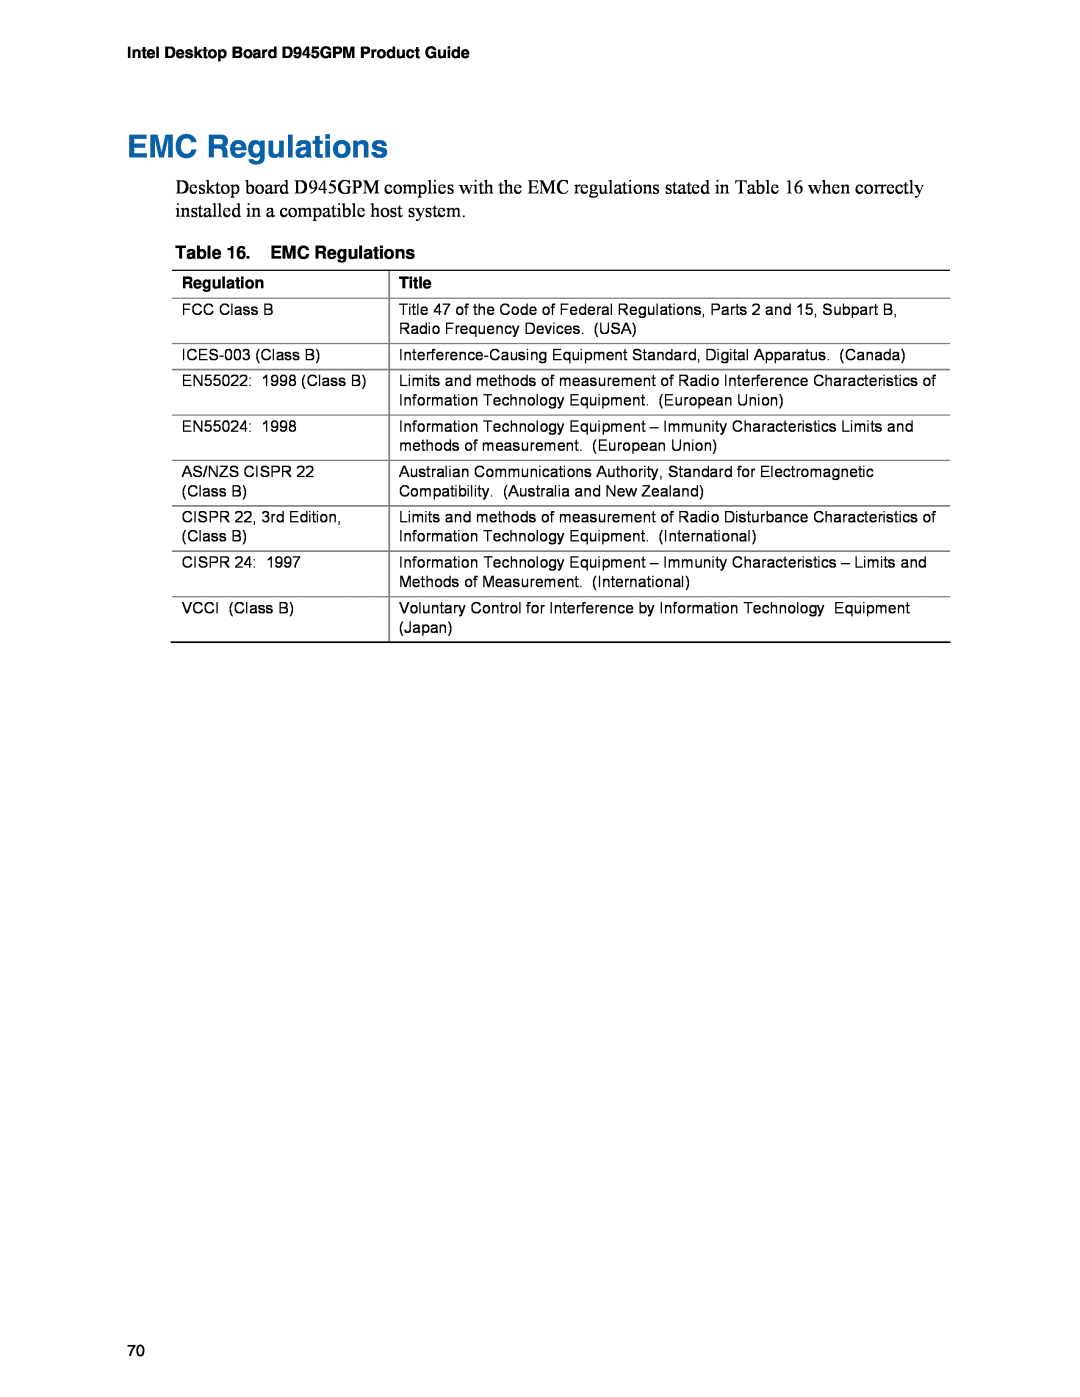 Intel manual EMC Regulations, Intel Desktop Board D945GPM Product Guide 